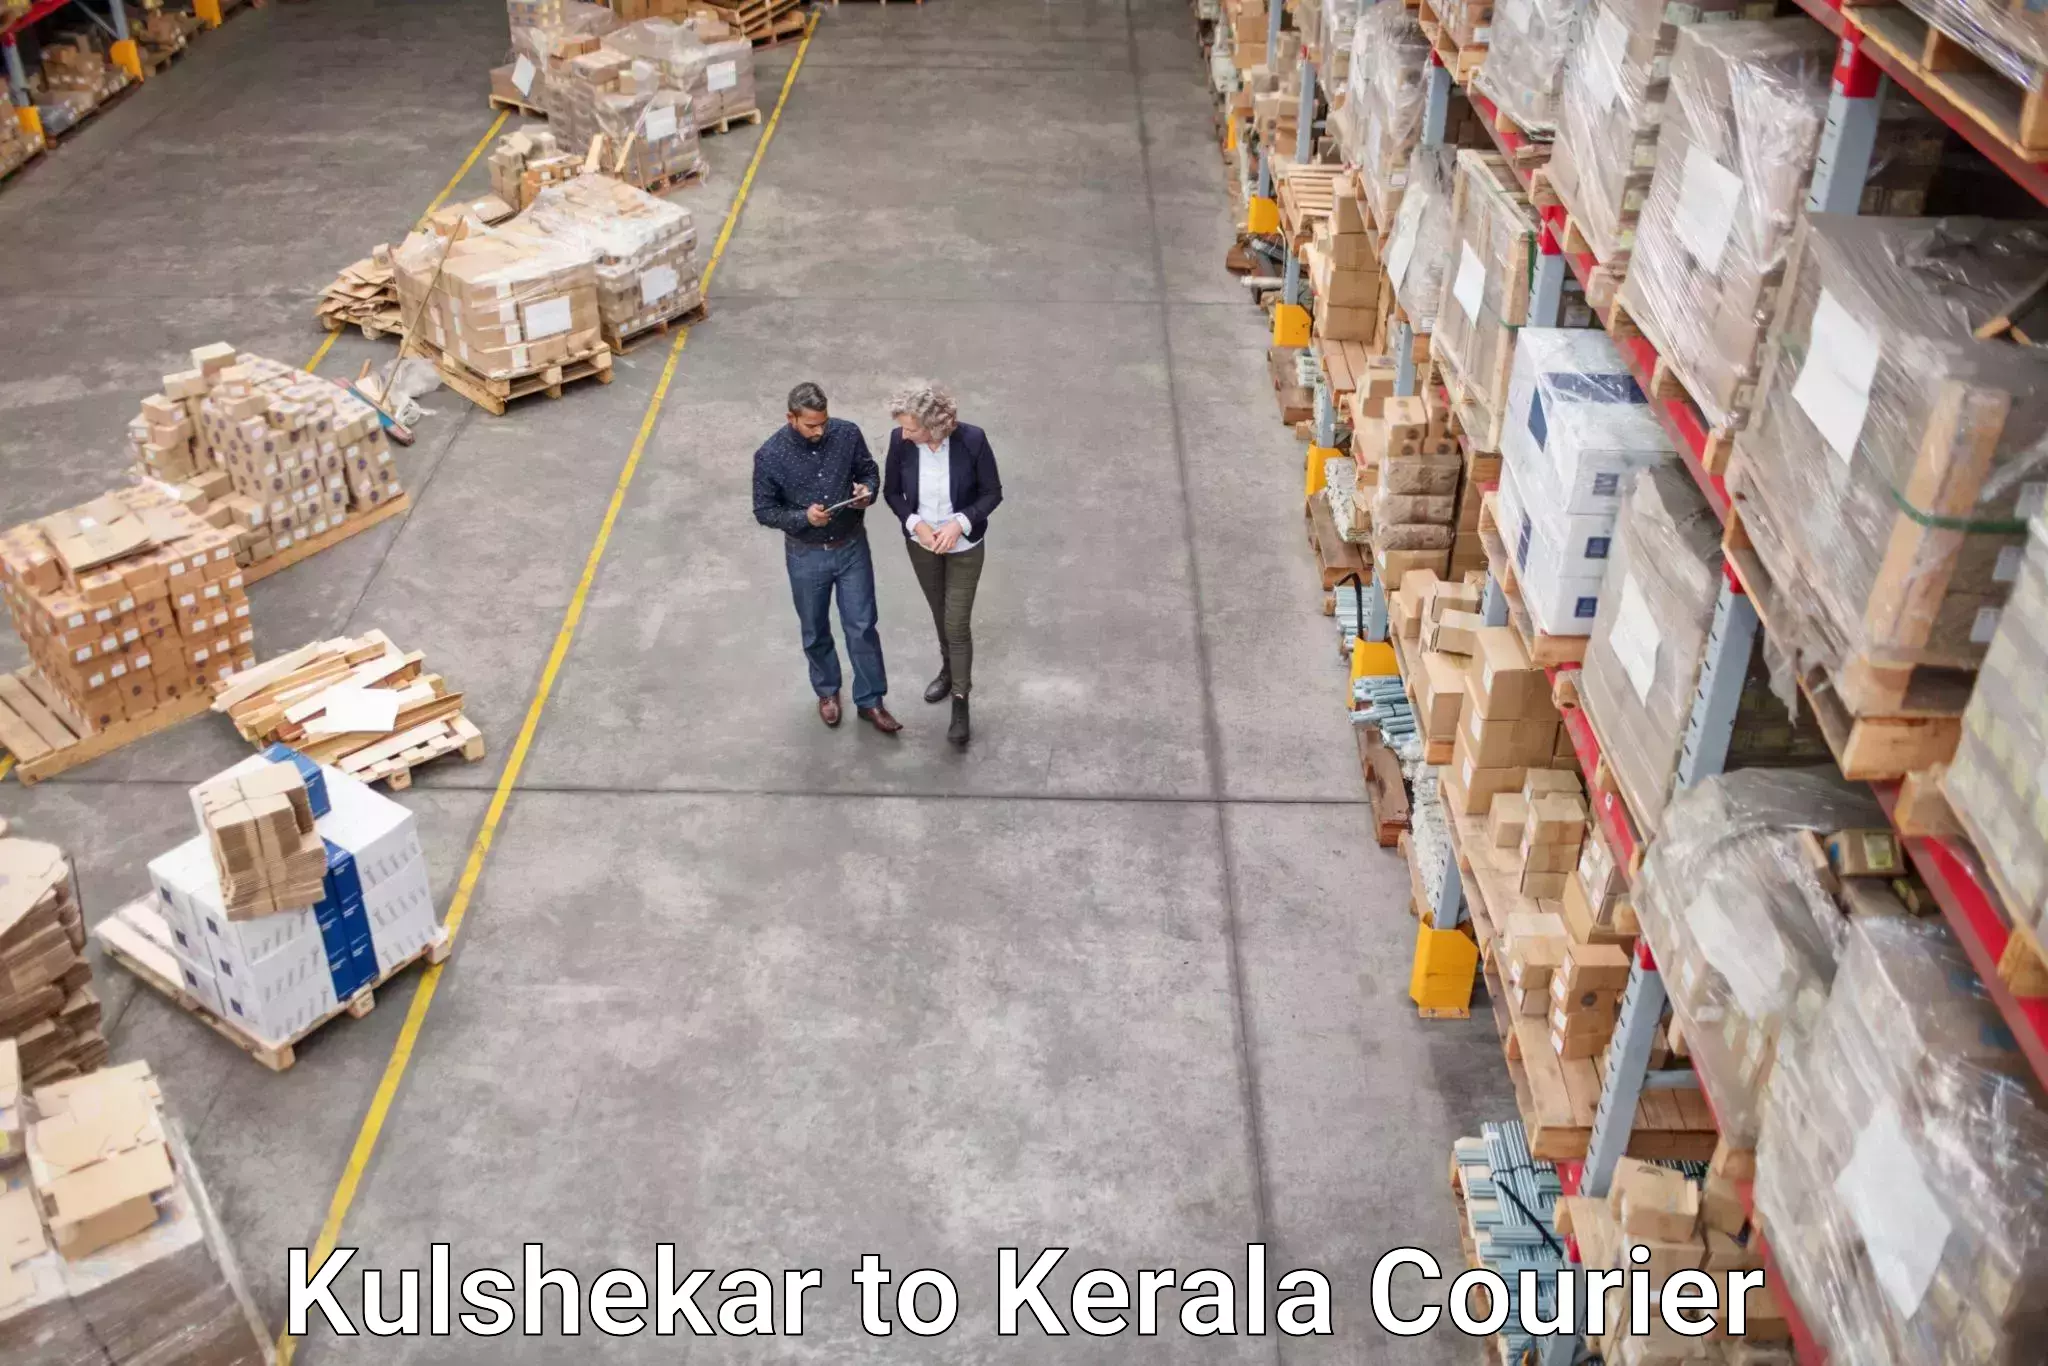 Easy access courier services Kulshekar to Kerala